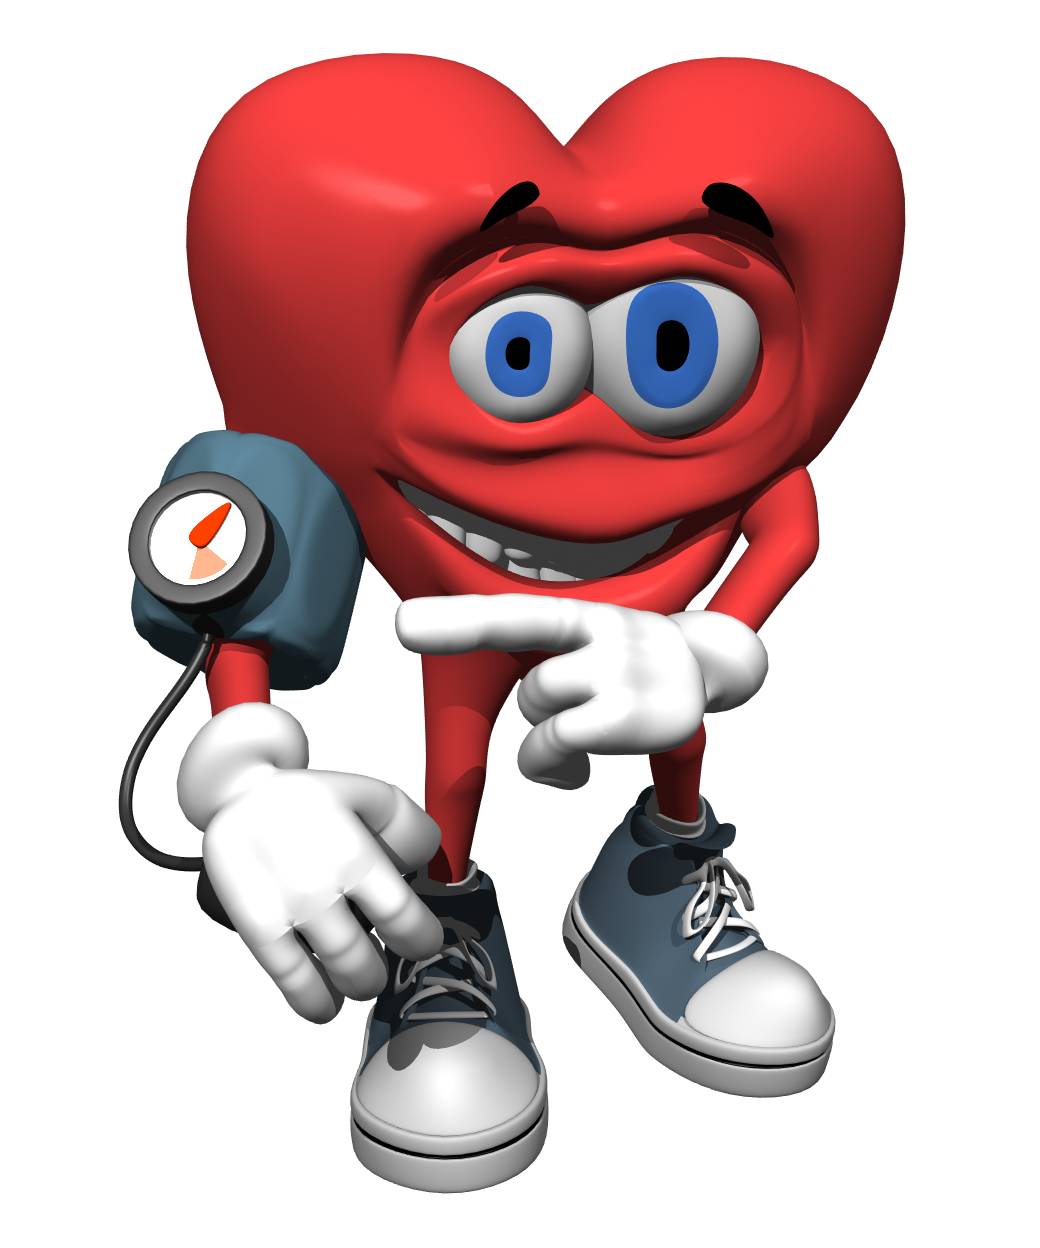 Blood Pressure Cuff Picture | Free Download Clip Art | Free Clip ...